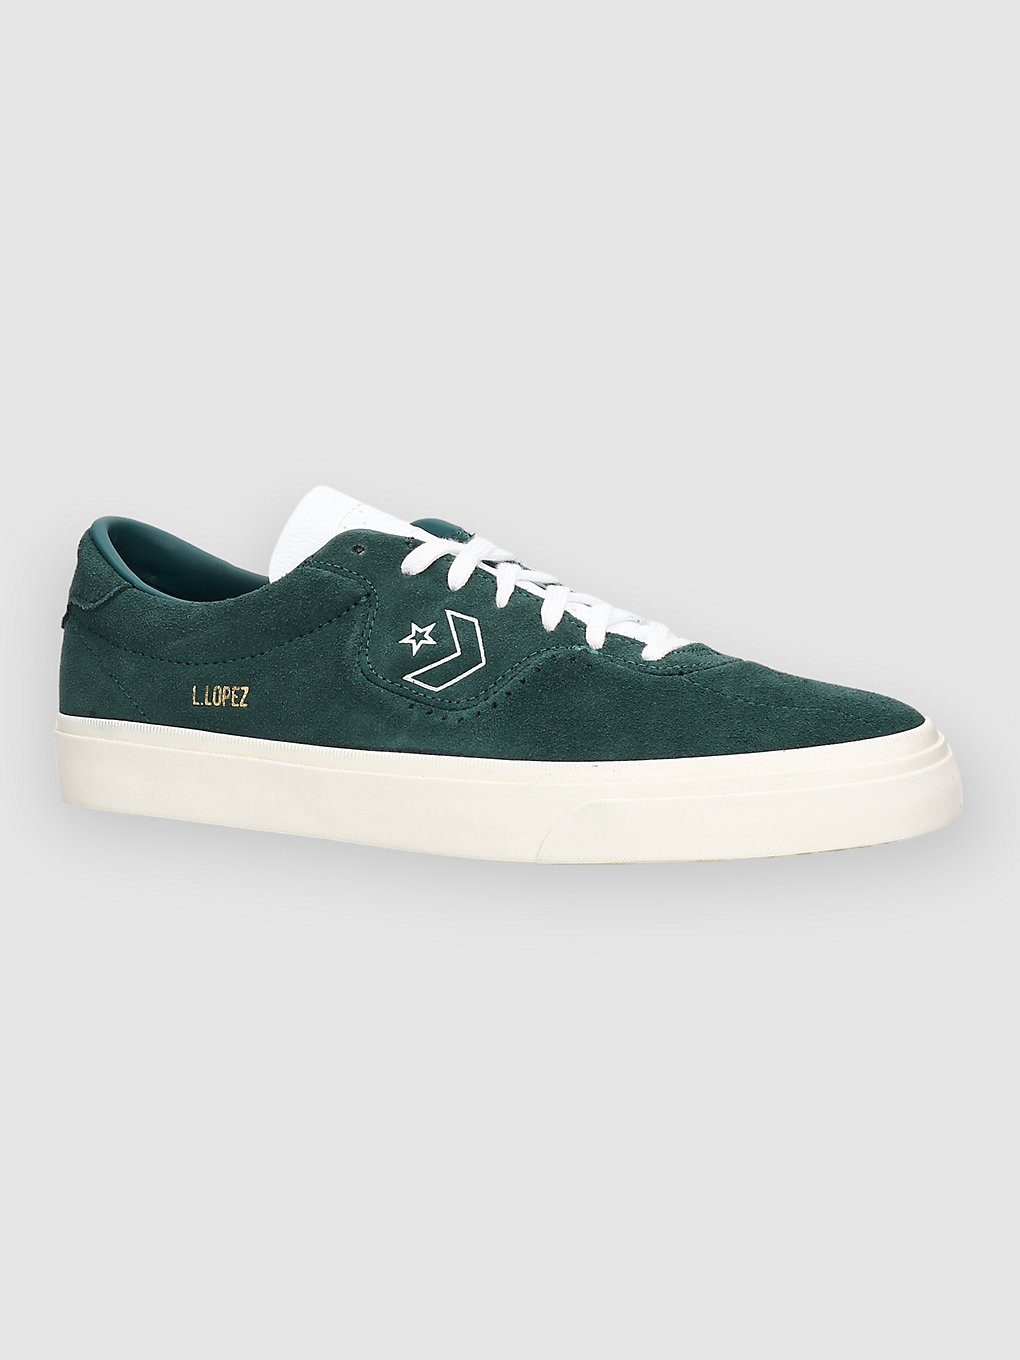 Converse Louie Lopez Pro Skateschoenen groen